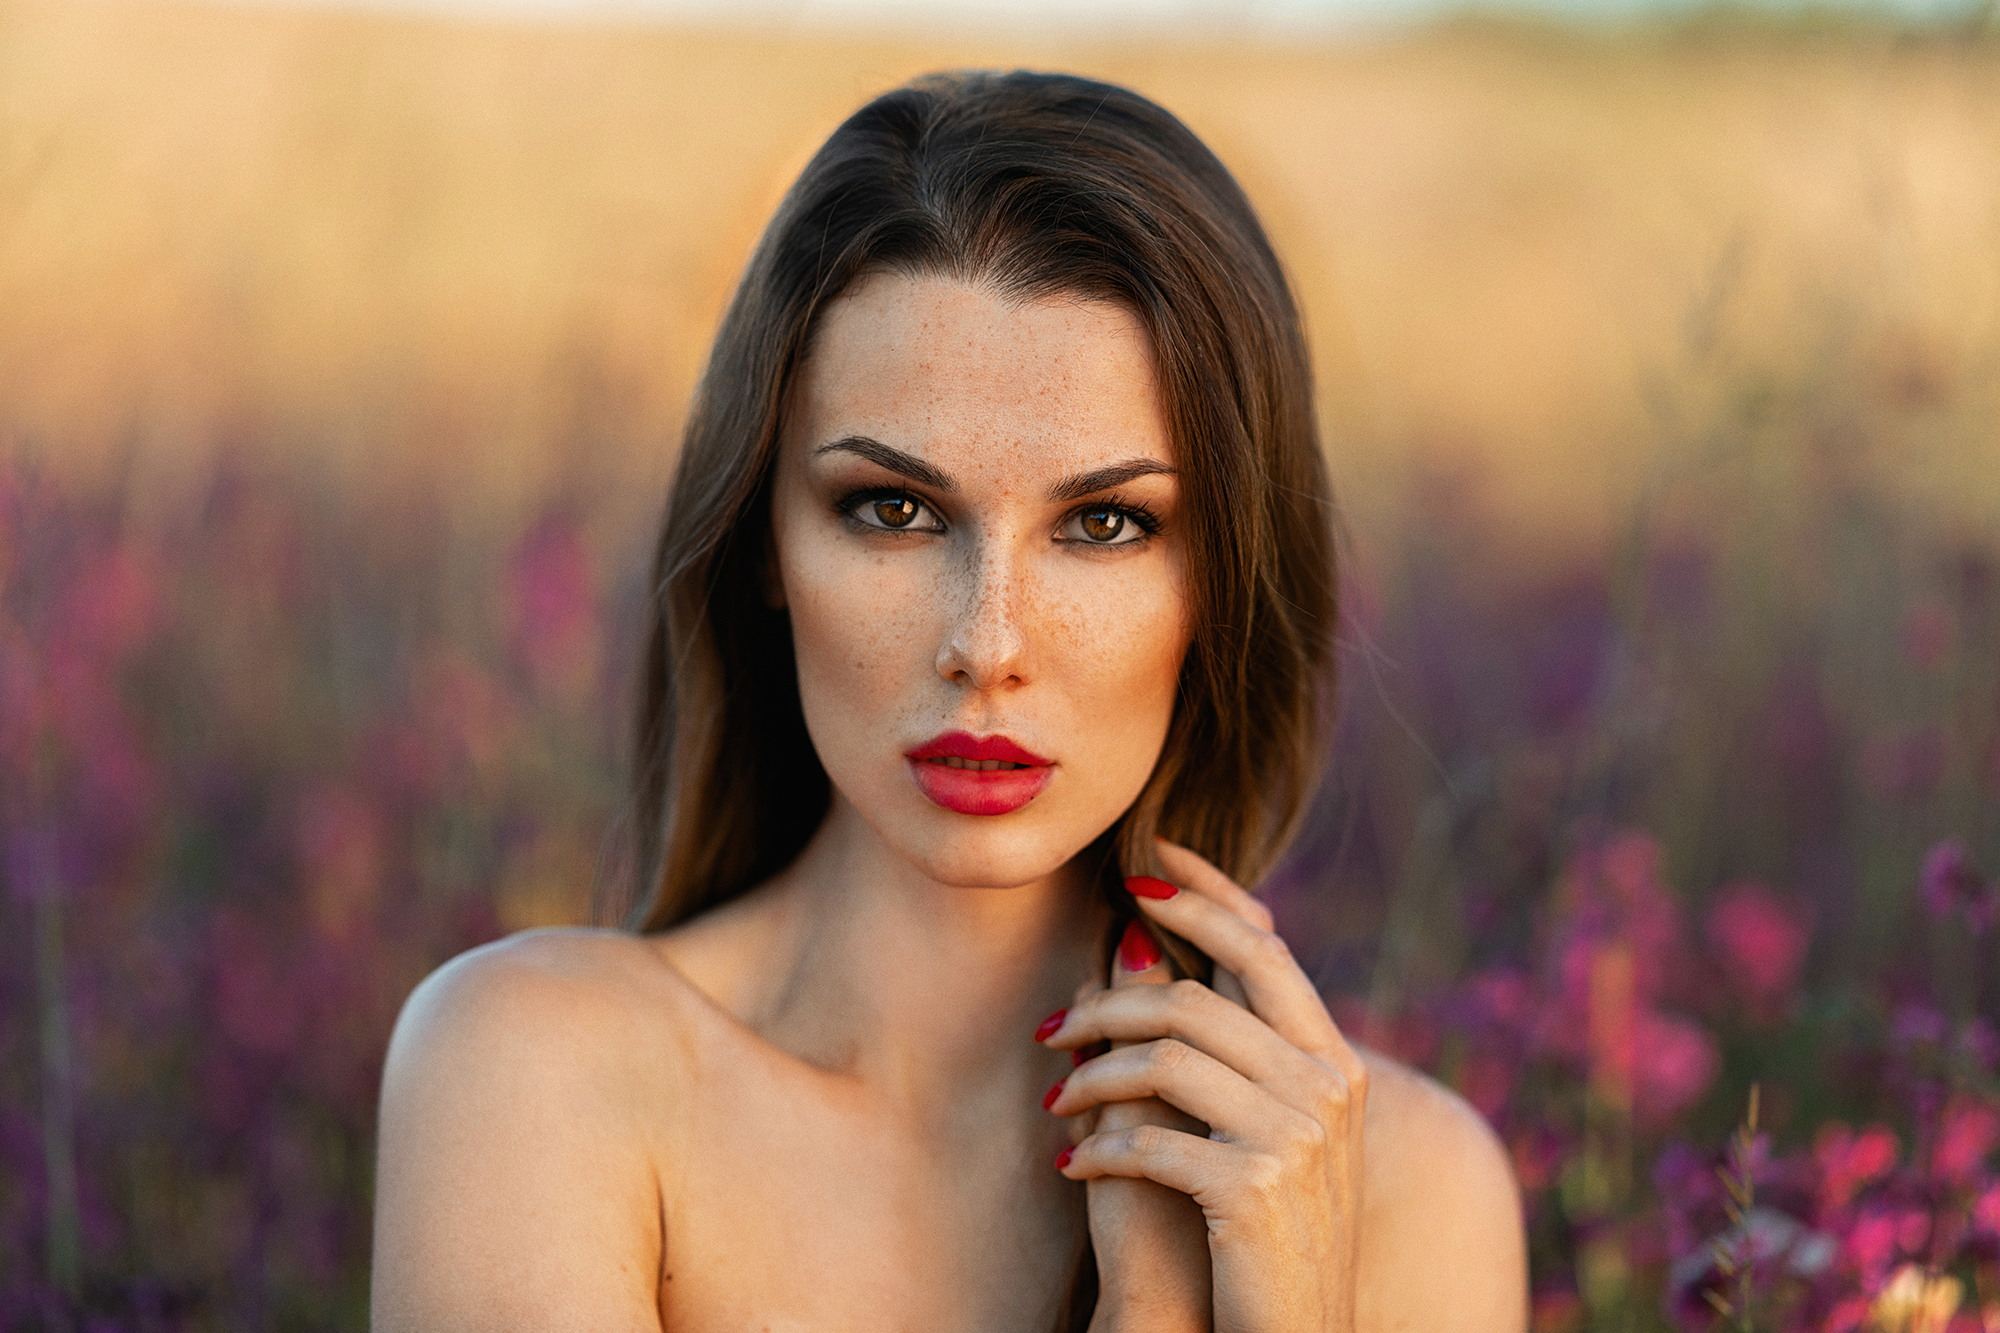 People 2000x1333 Aleksey Sumnikov women Kristina Fedorov brunette brown eyes freckles red lipstick red nails field lavender portrait model women outdoors